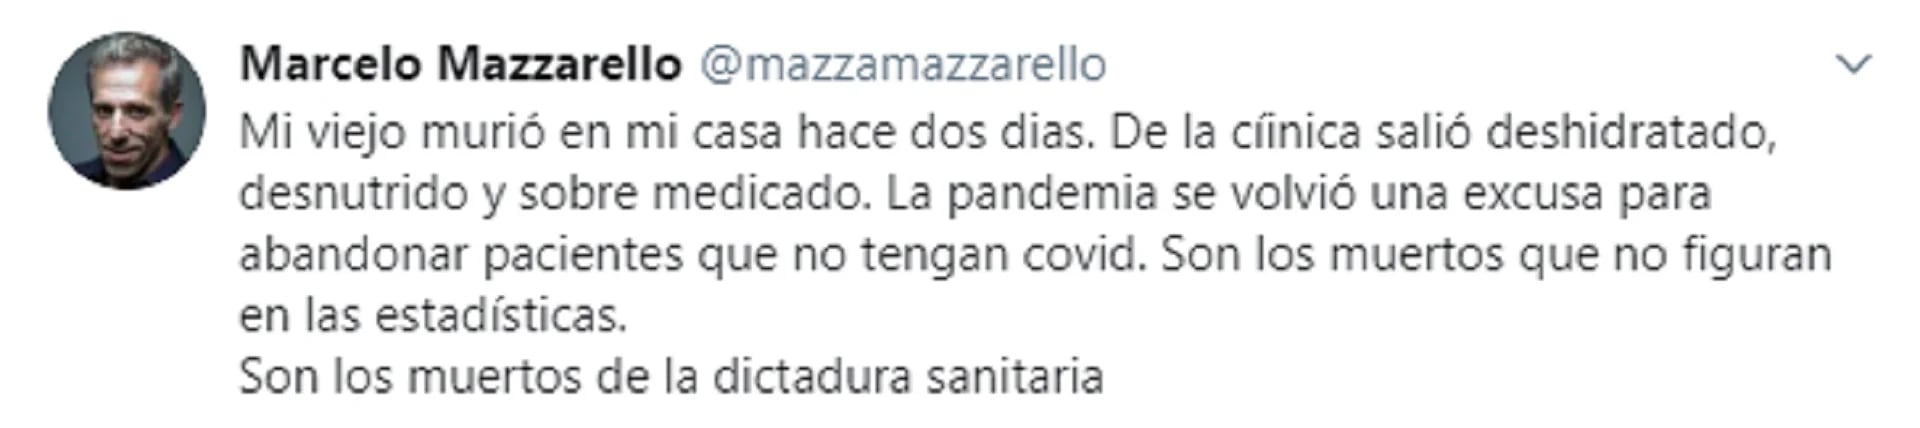 La grave denuncia de Marcelo Mazzarello en Twitter